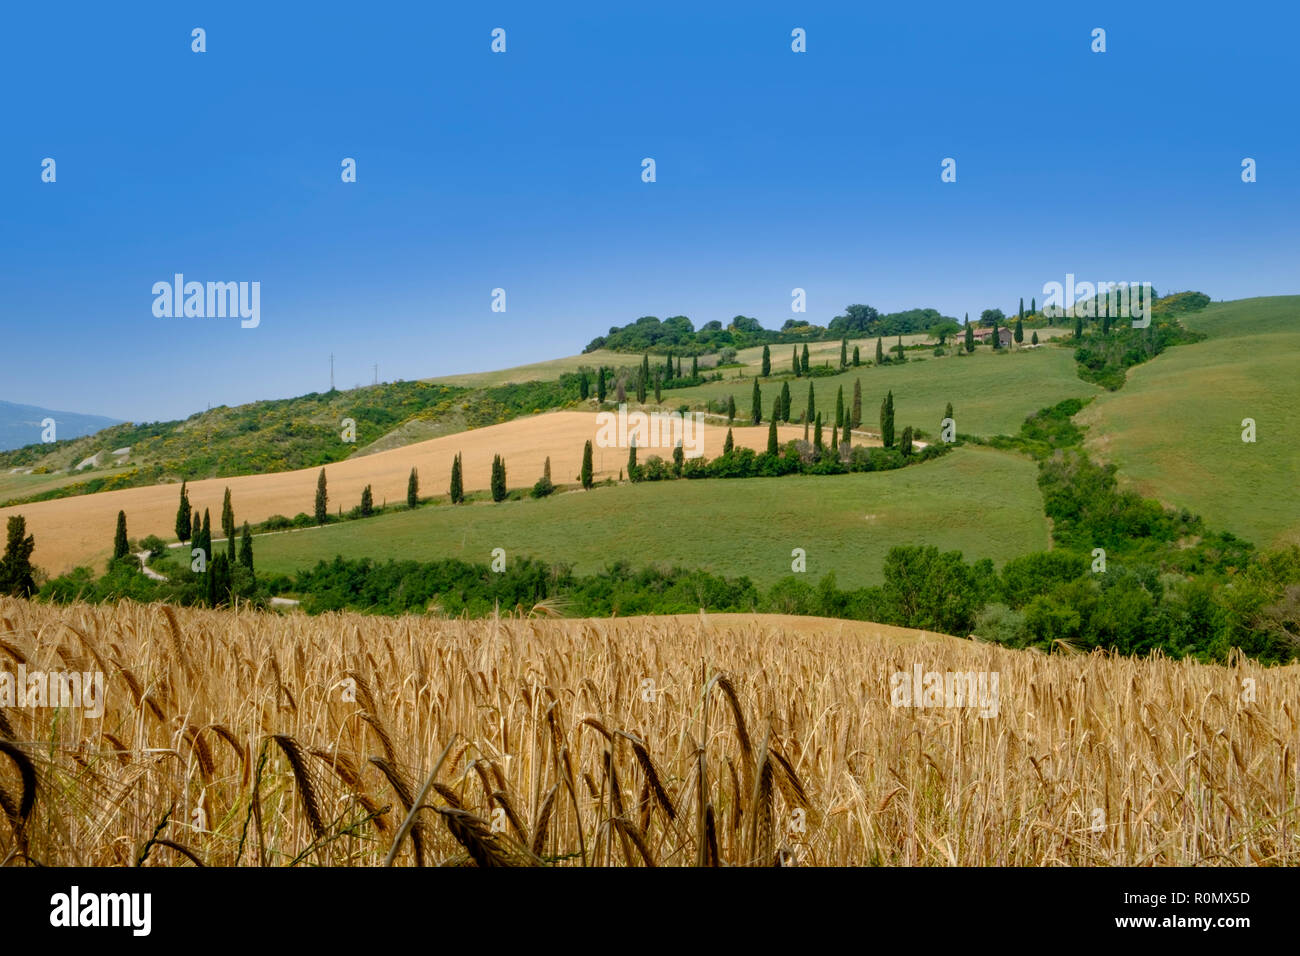 Durum wheat growing Tuscany, used for making pasta Stock Photo